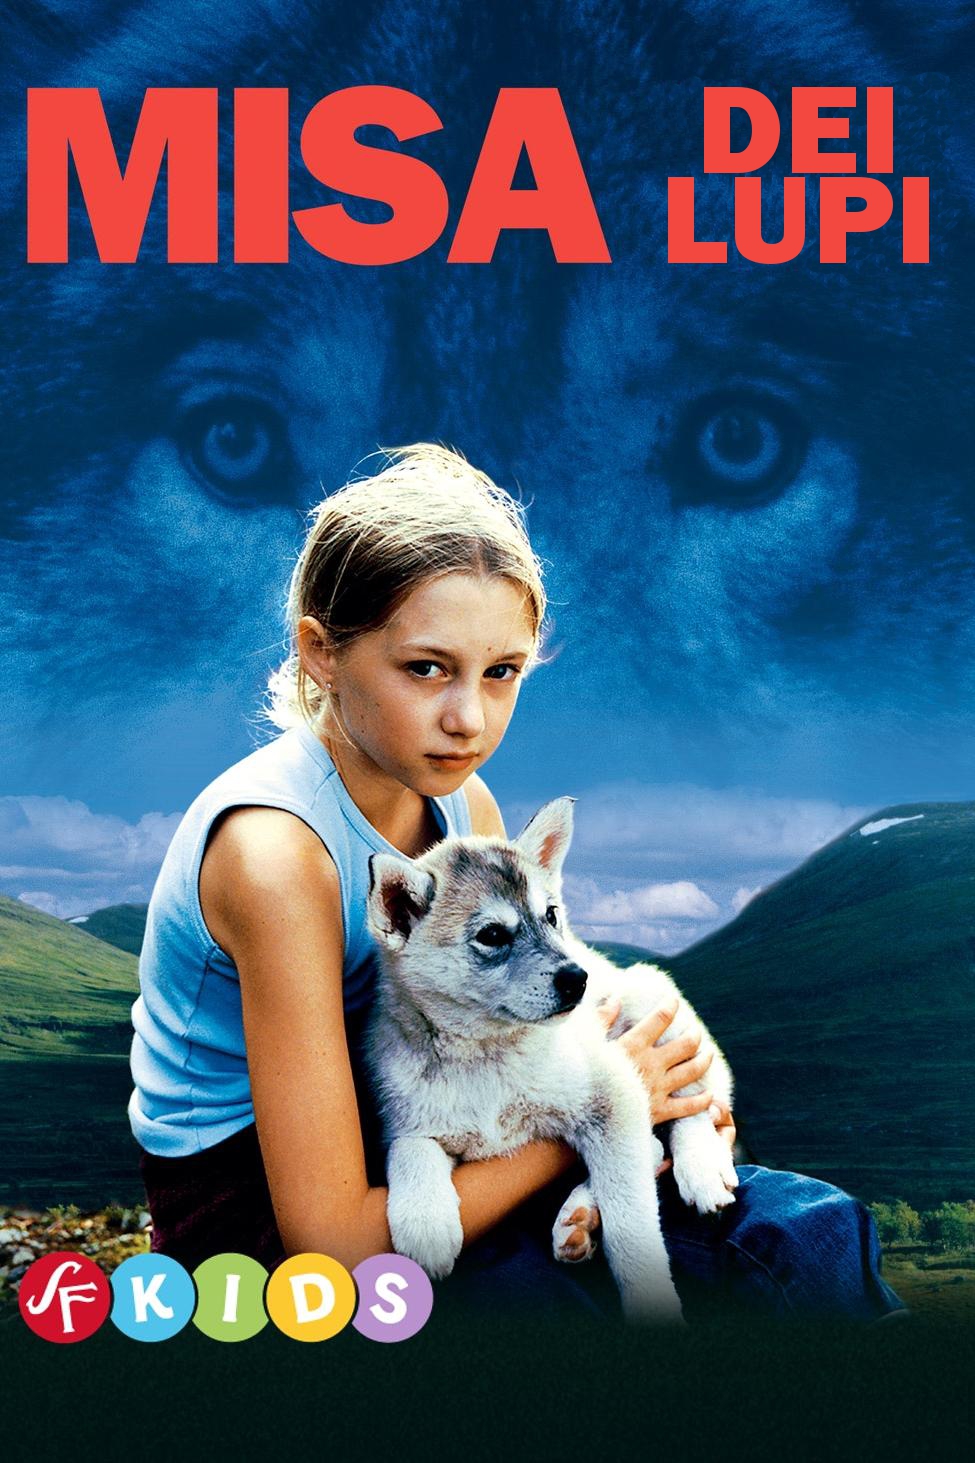 Misa dei lupi (2003)